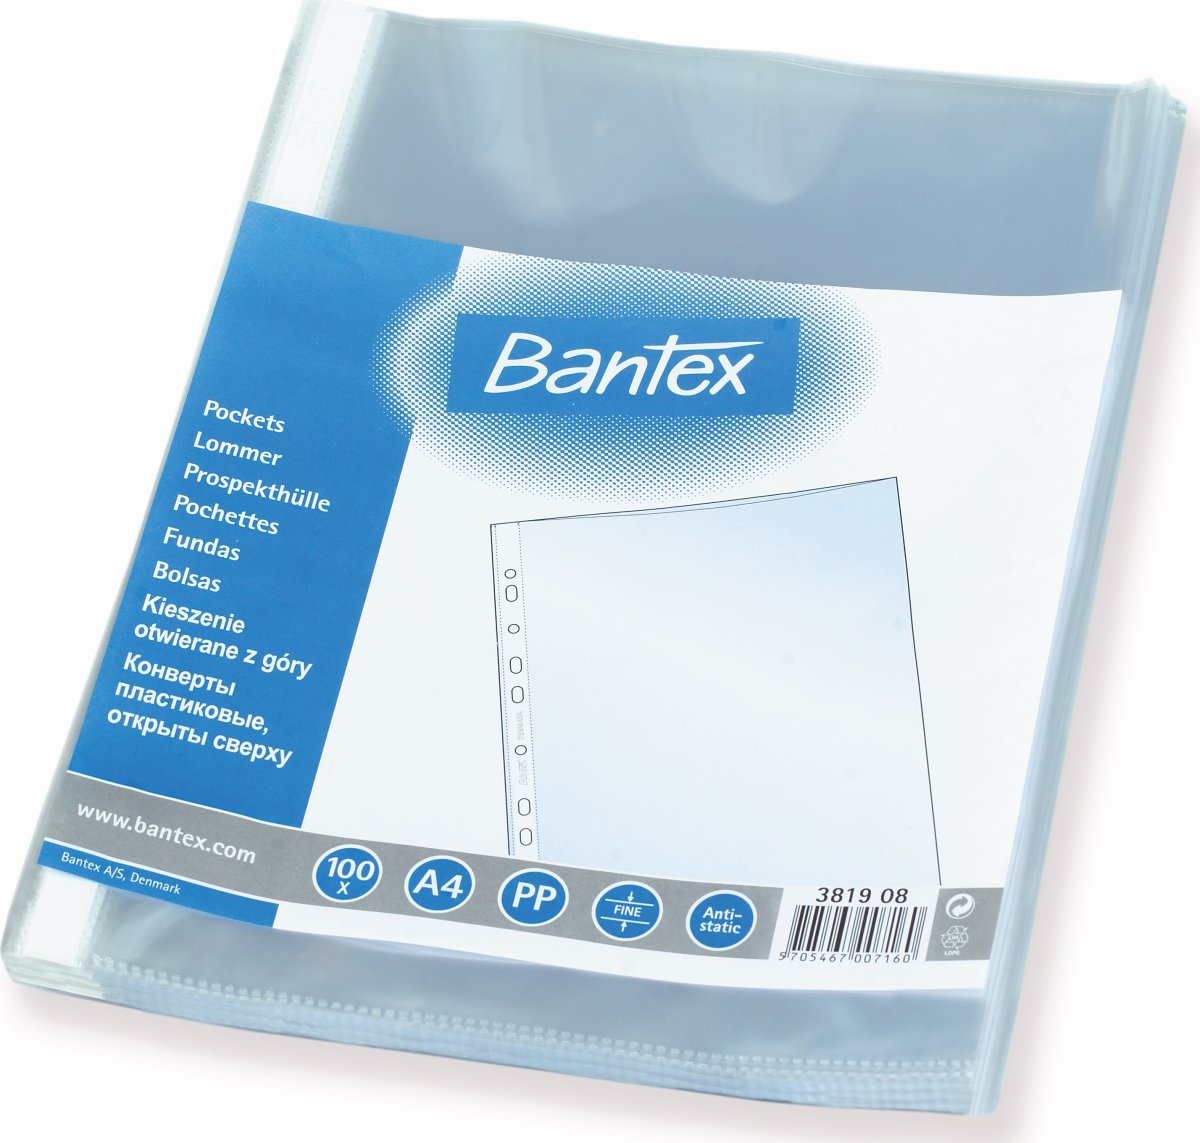 Bantex lomme A4, PP, 0.06mm, top, 100stk